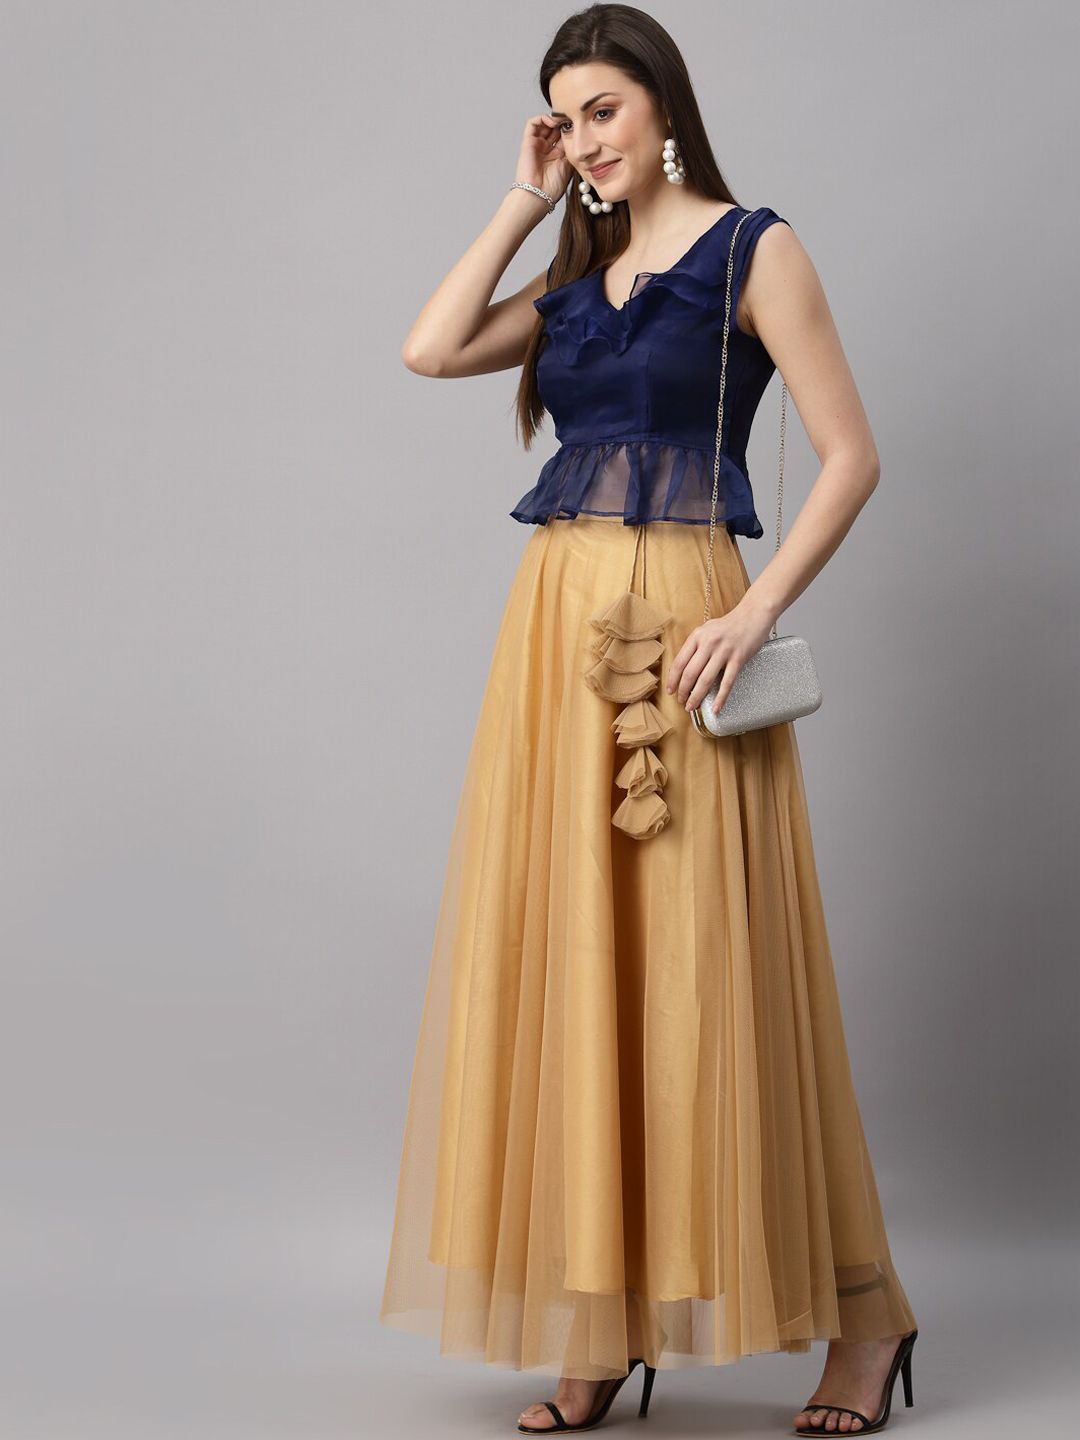 NEUDIS Women Beige & Navy Solid Net Flared Maxi Lehenga Skirt With Top Price in India